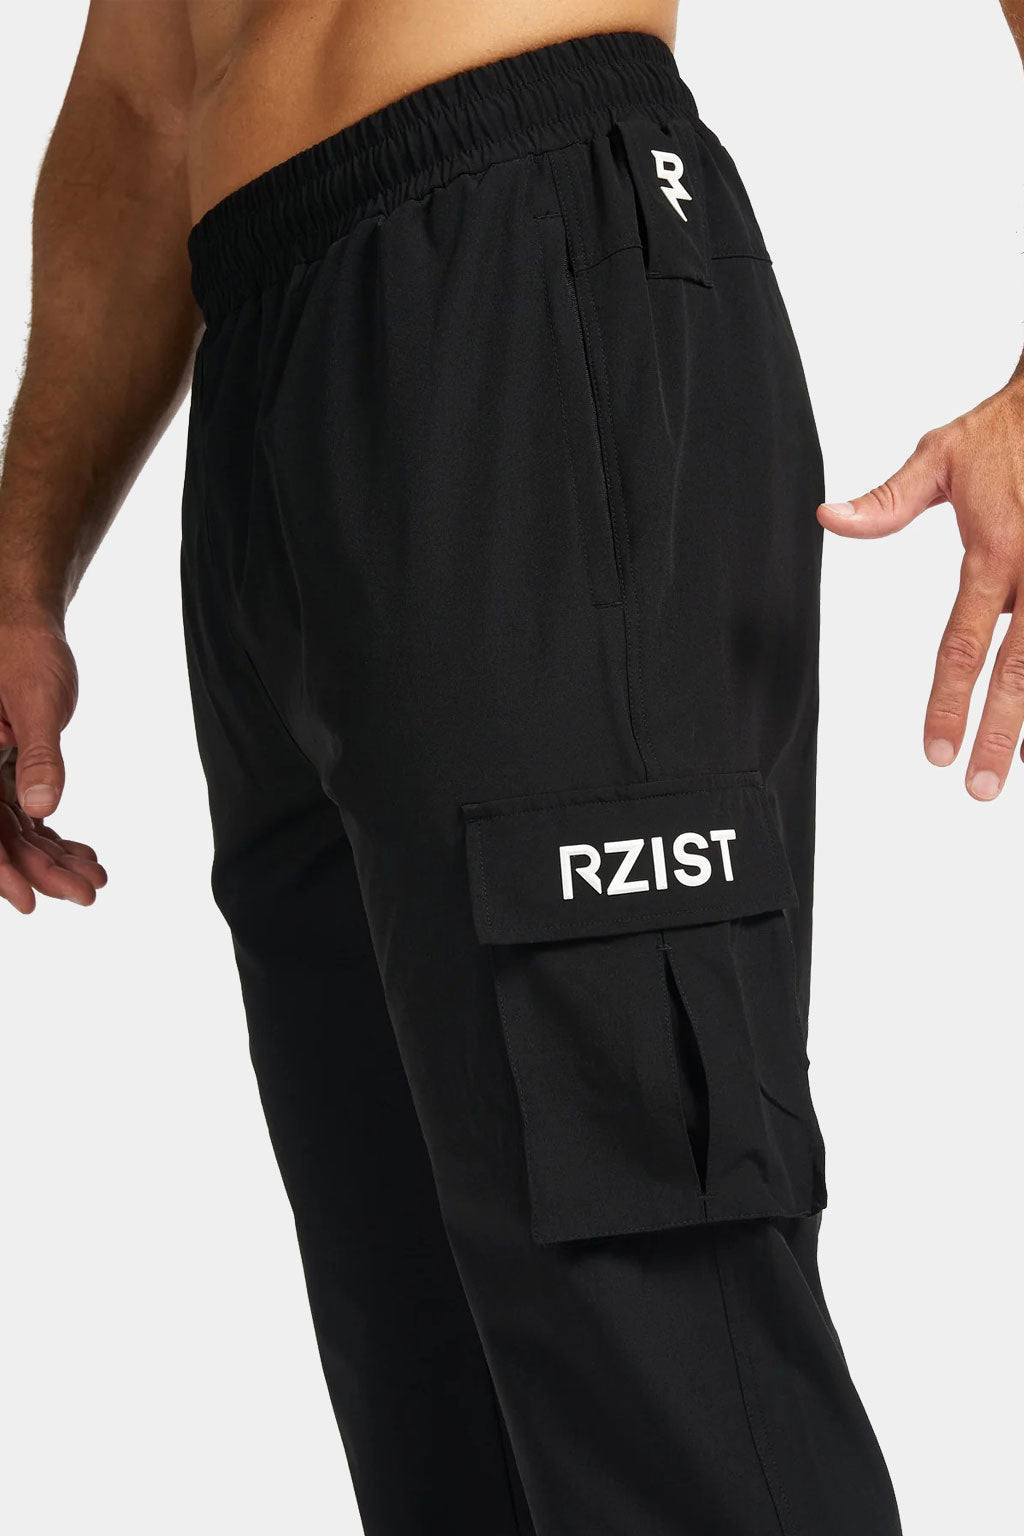 Rzist - Men's Active Cargo Pant